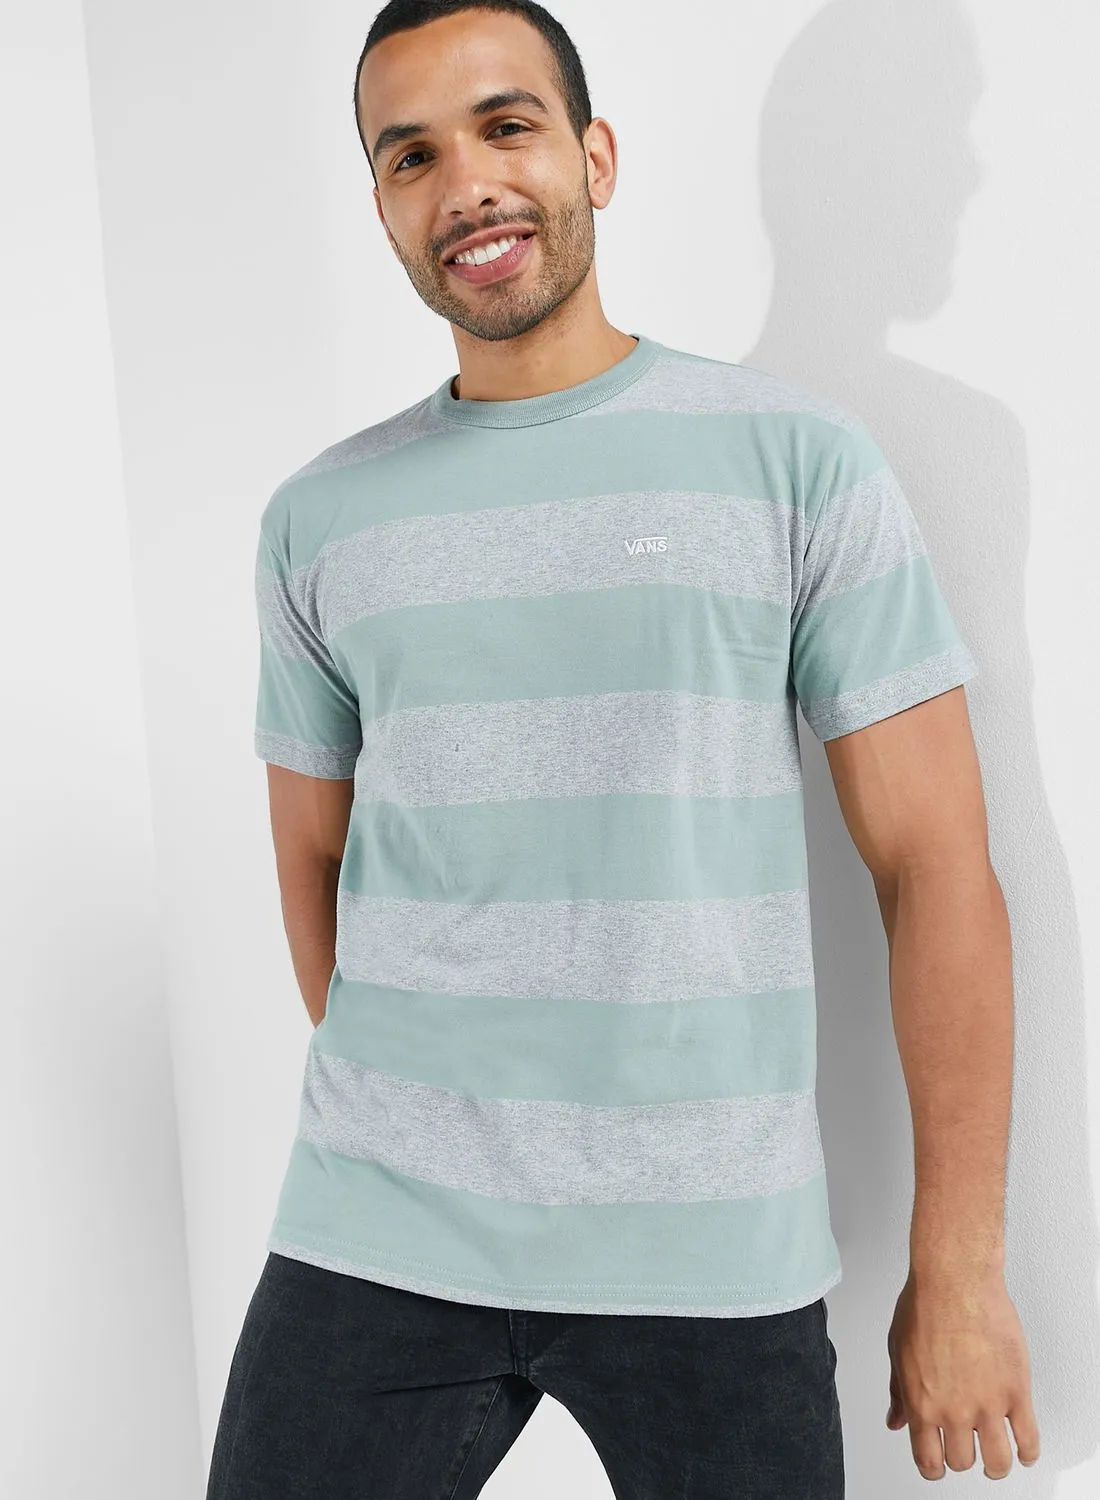 VANS Comfycush Stripe Knit T-Shirt